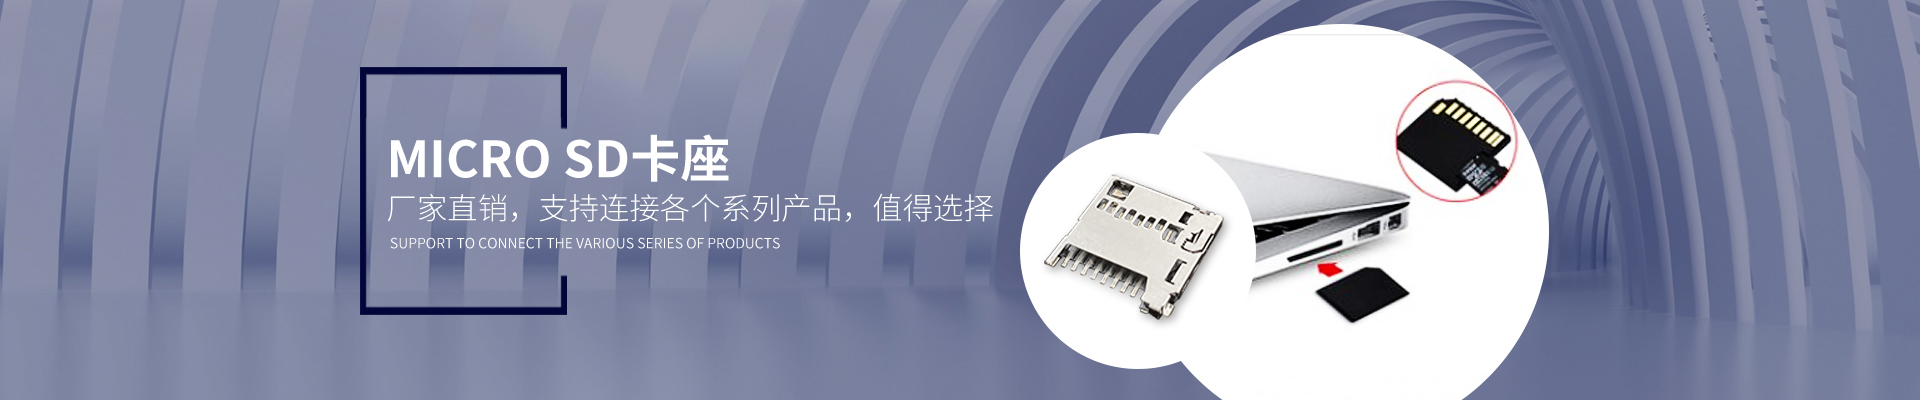 Micro SD卡座：厂家直销，支持连接各个系列产品，值得选择